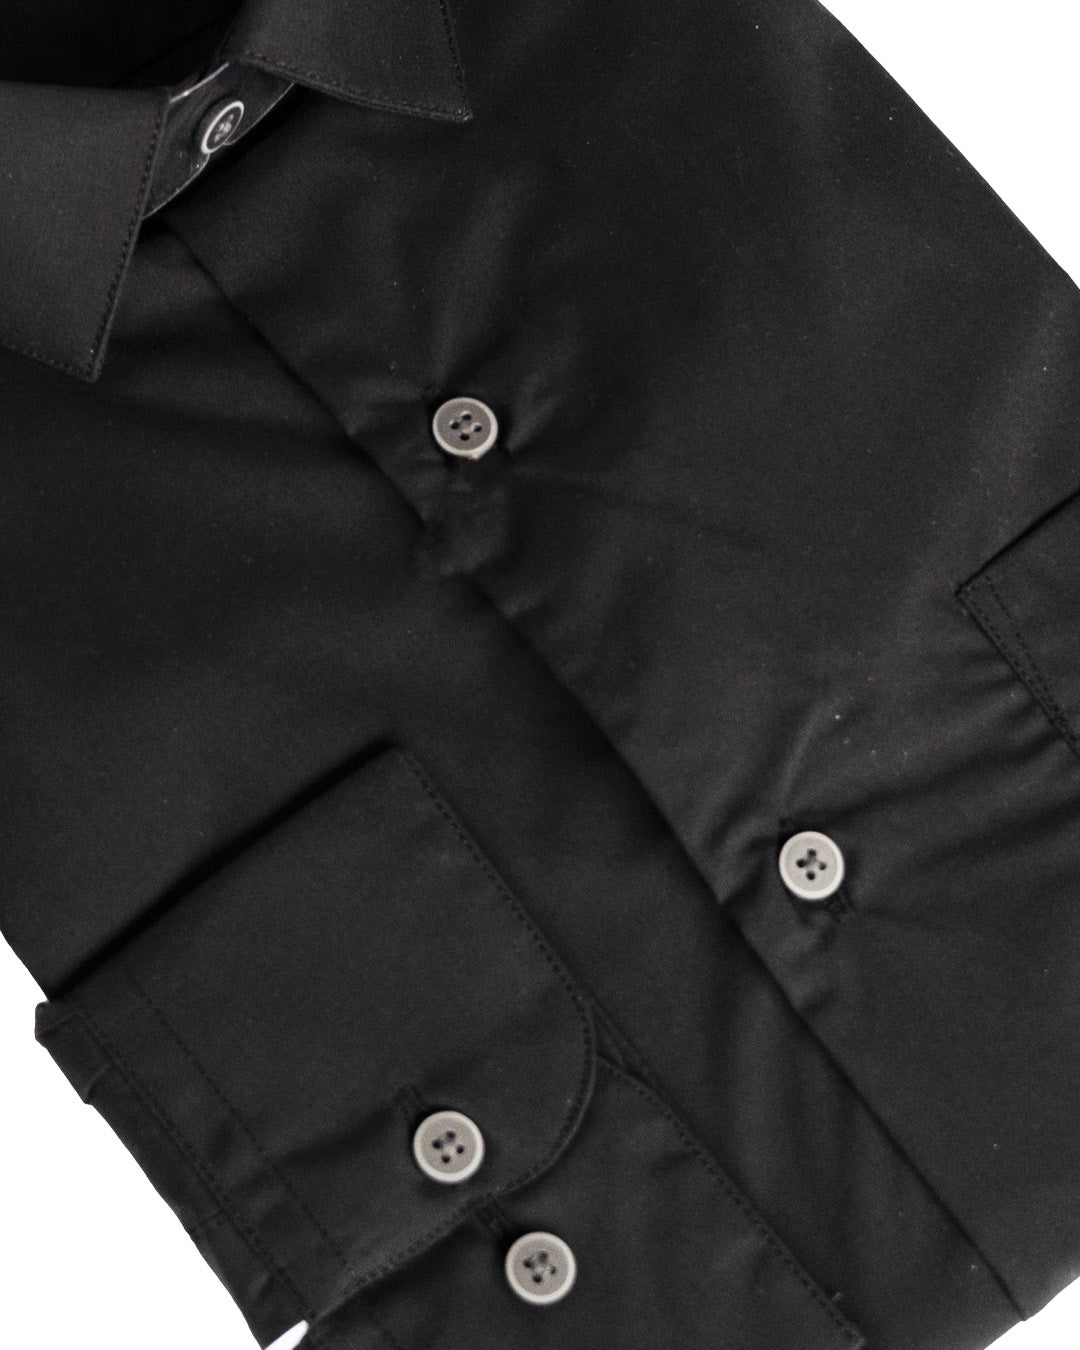 T the Brand Classic Black Cotton Shirt